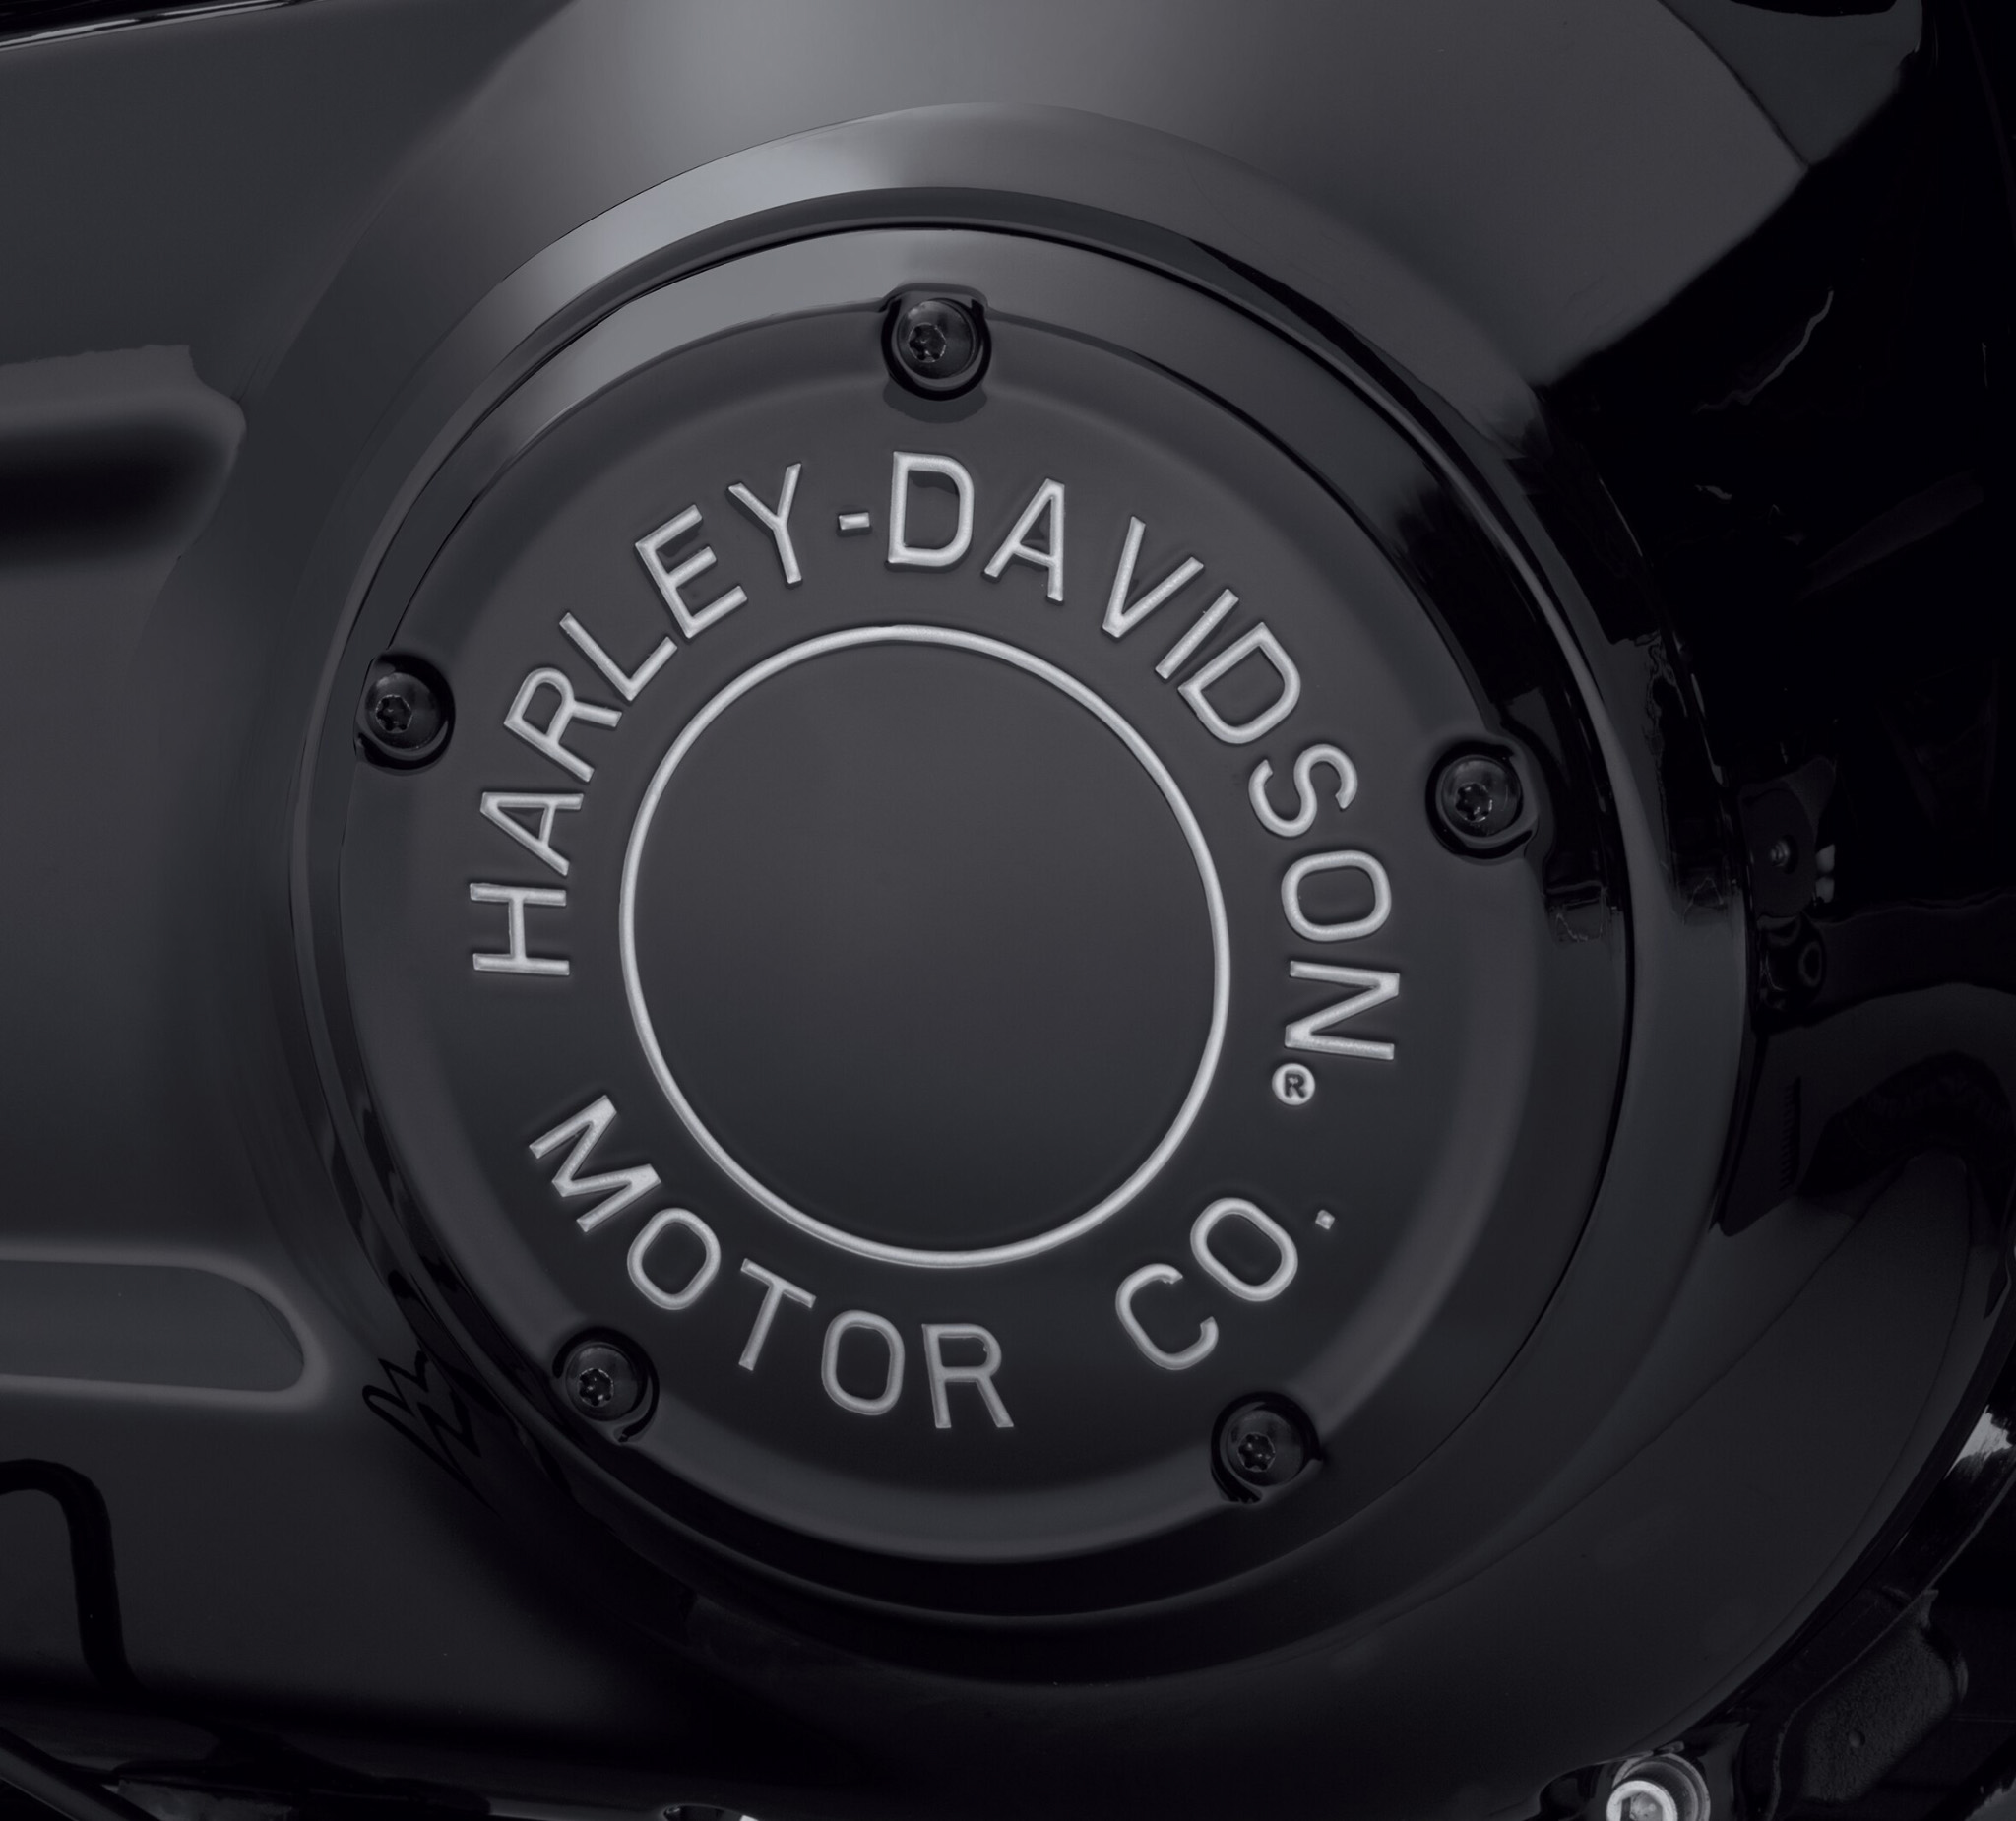 harley davidson engine covers